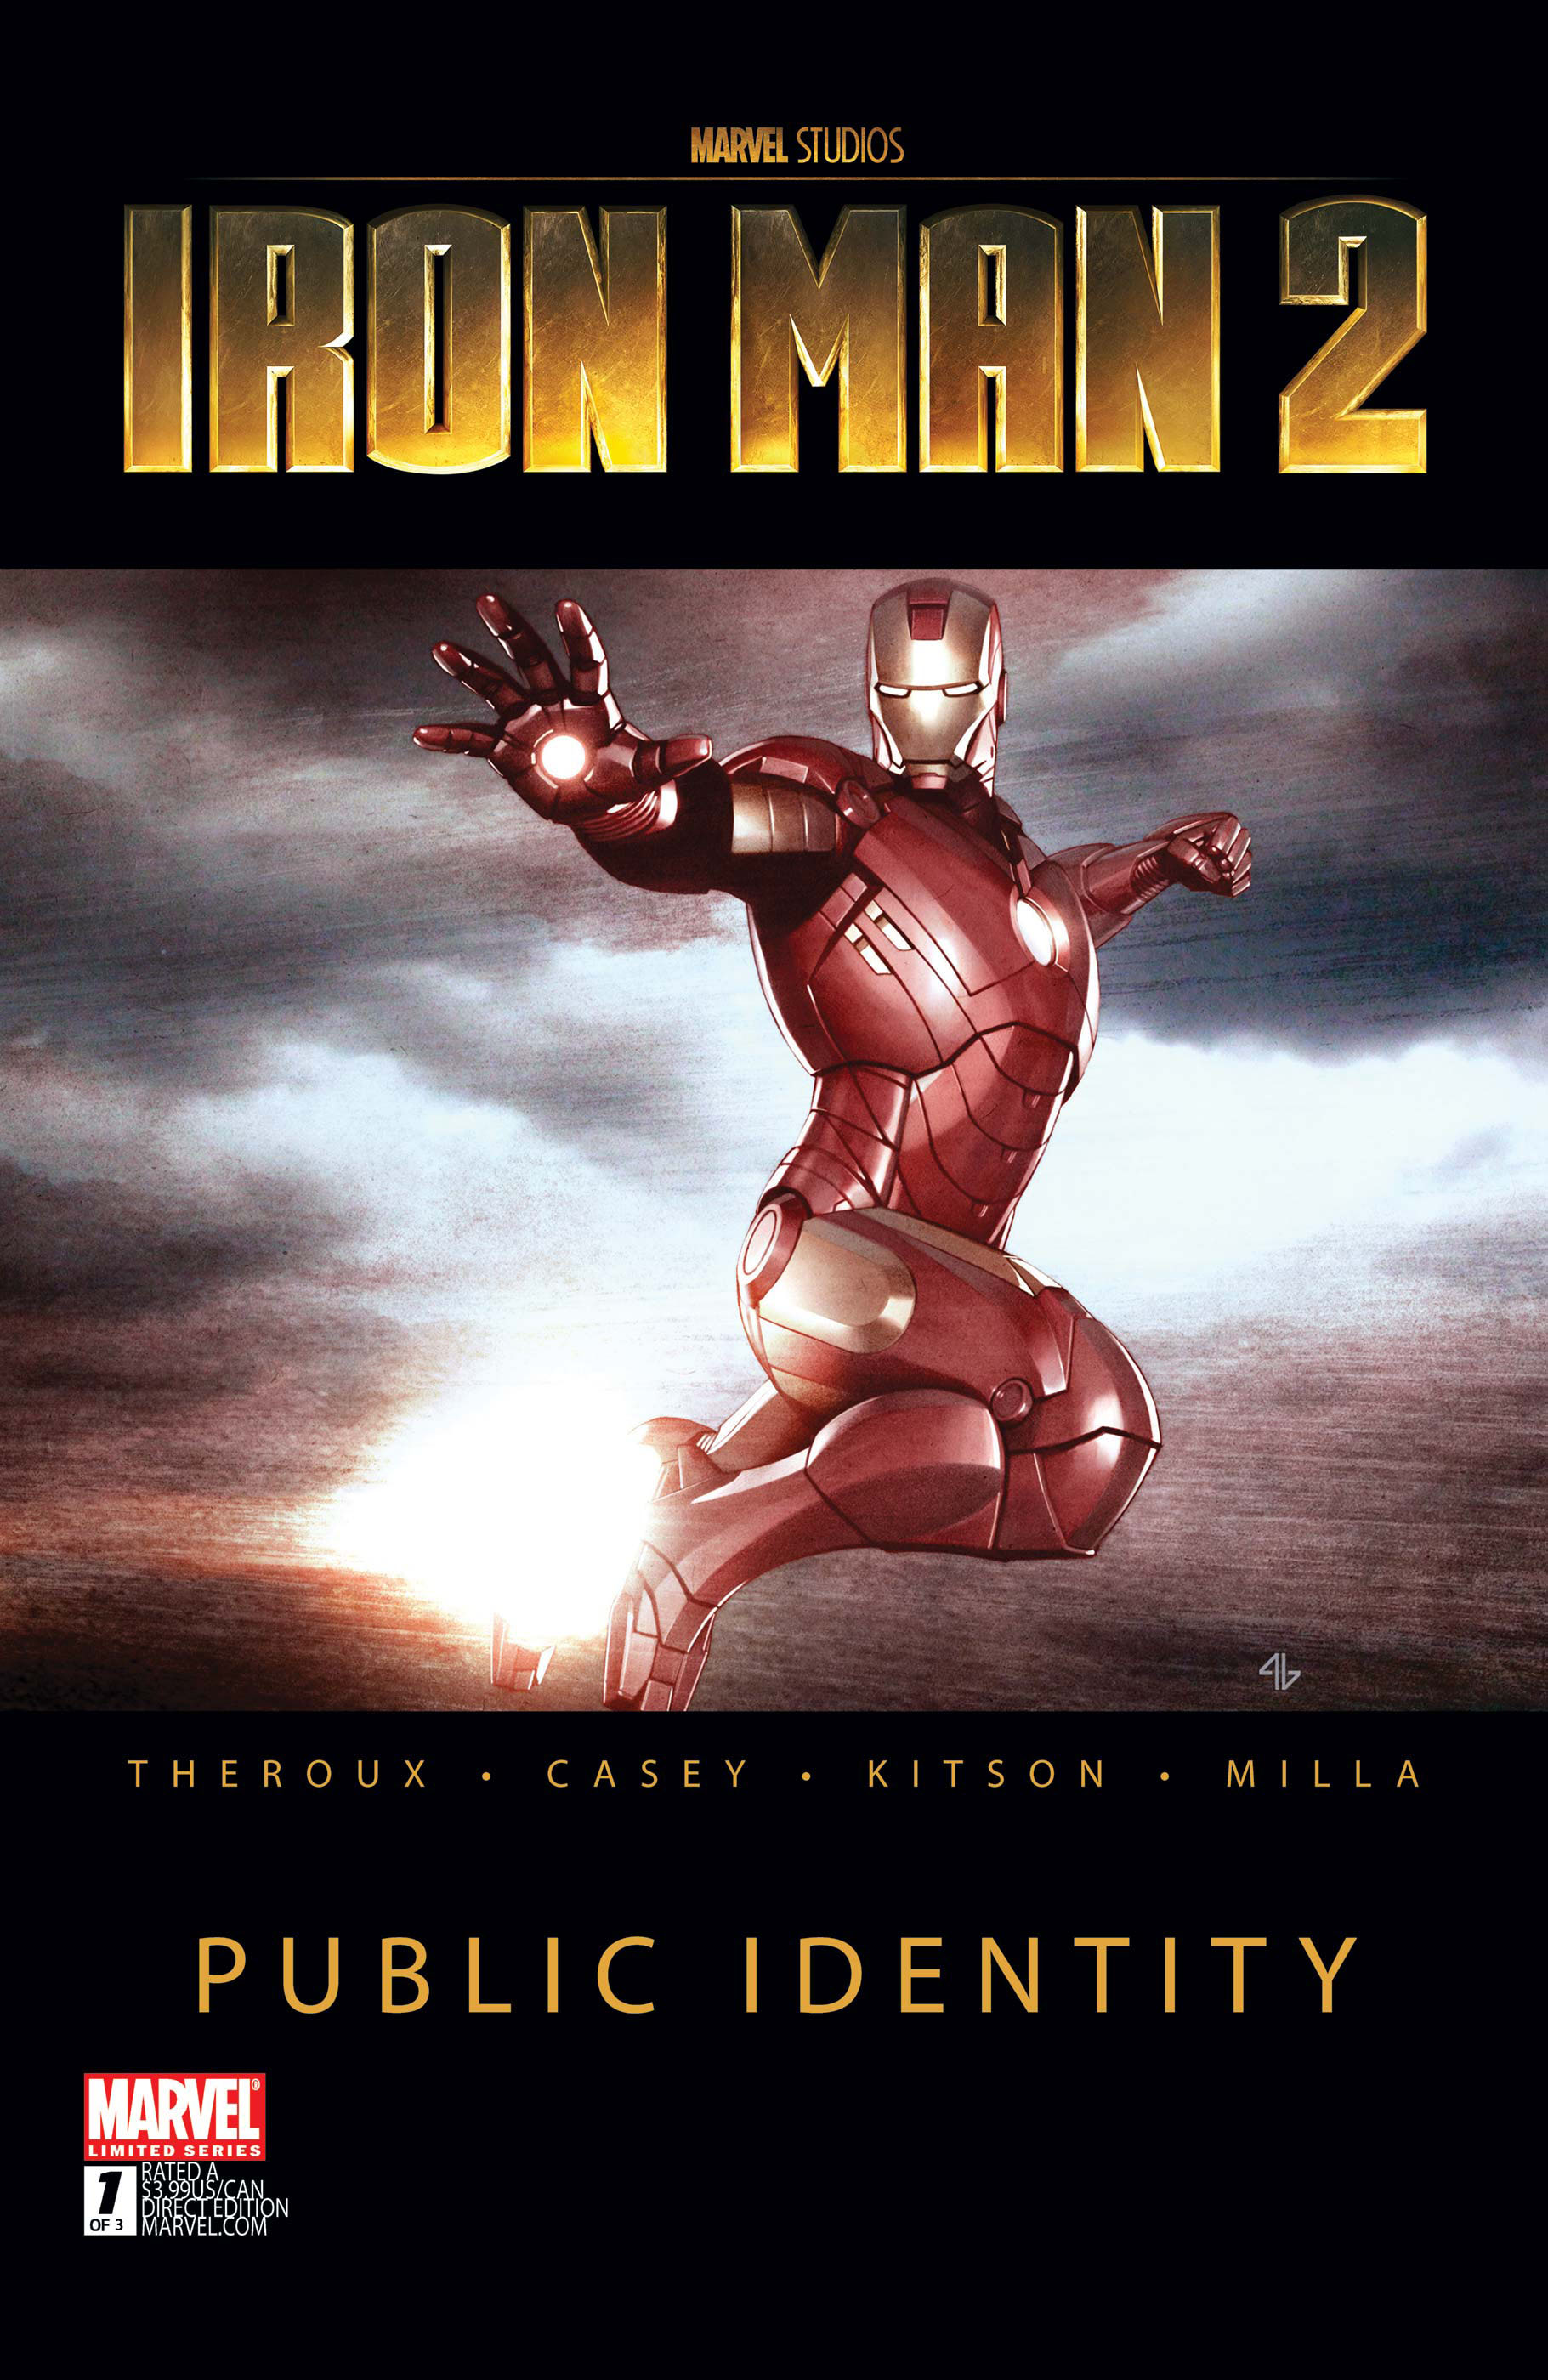 Iron man 2 public identity